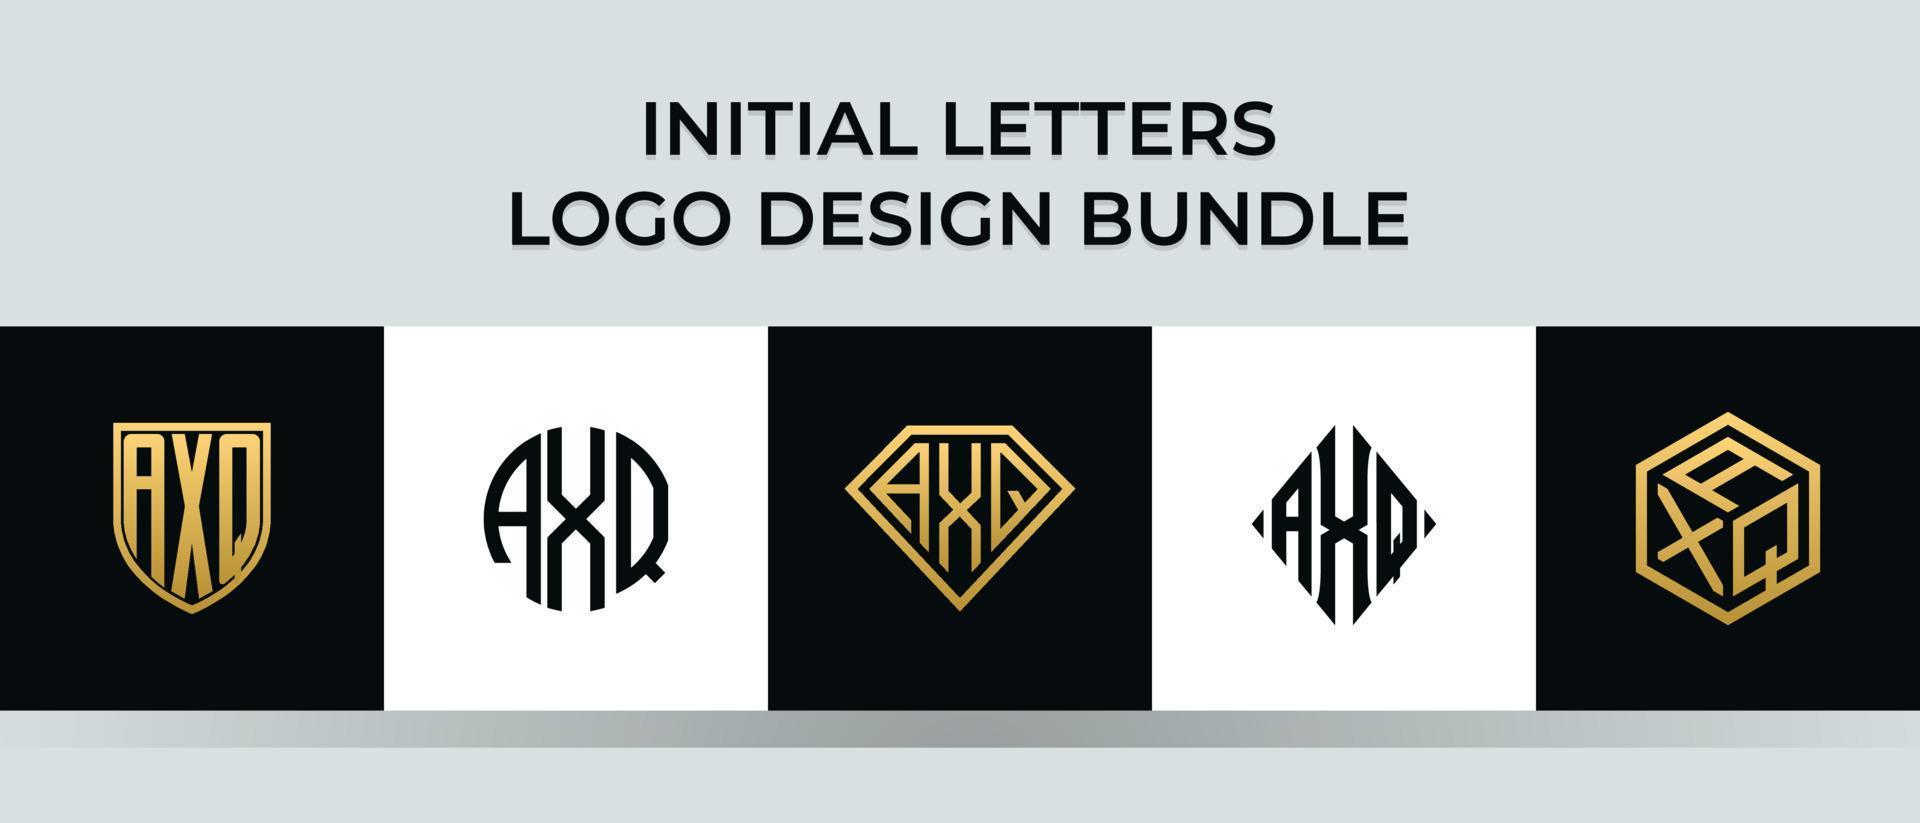 Anfangsbuchstaben axq Logo Designs Bundle vektor